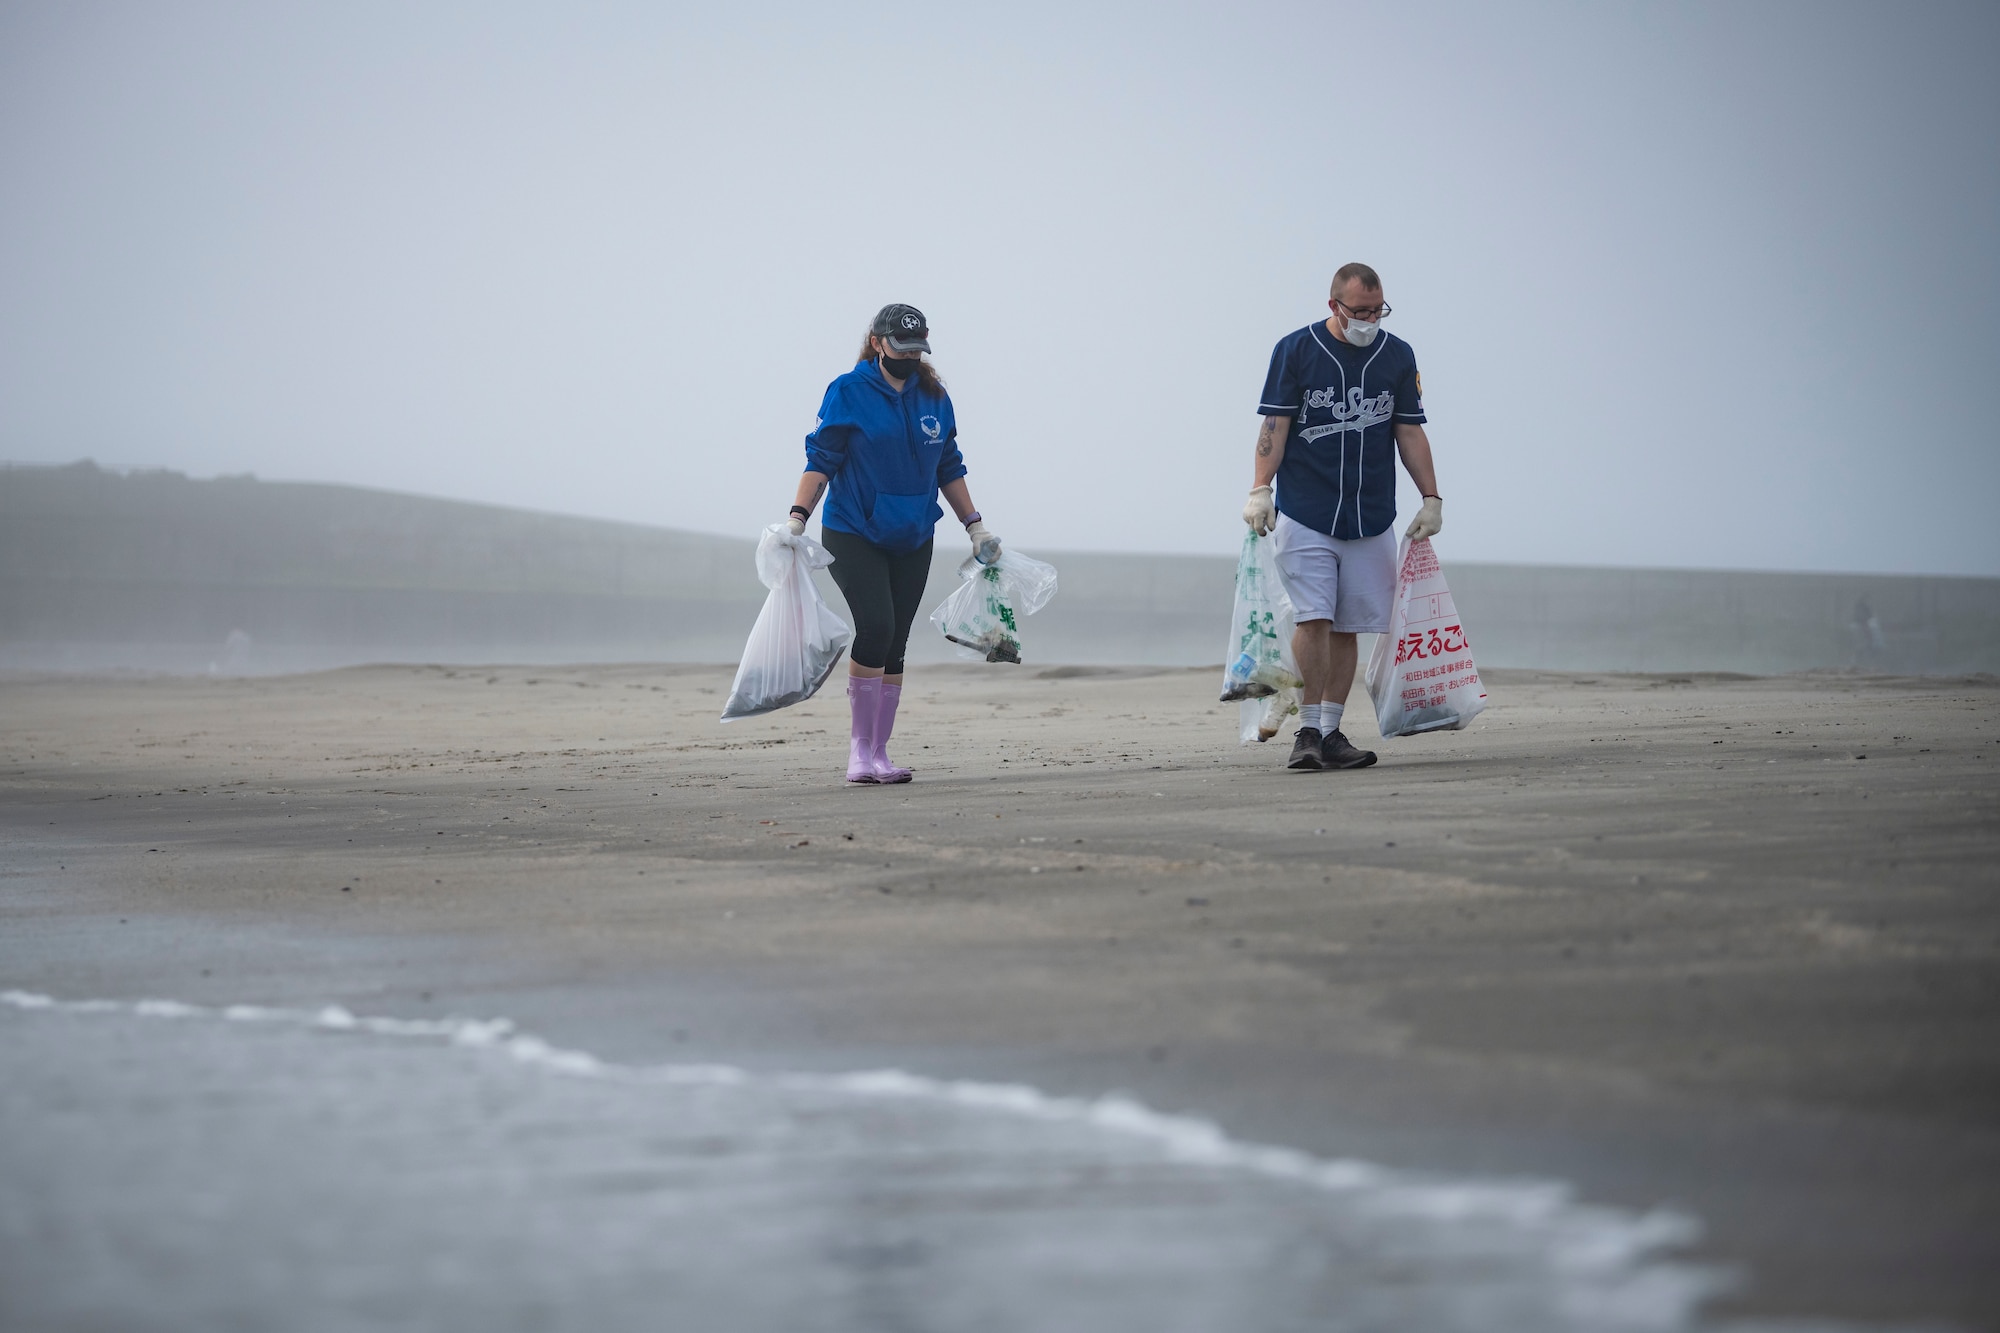 Team Misawa members hold garbage bags as they walk next to waves crashing.